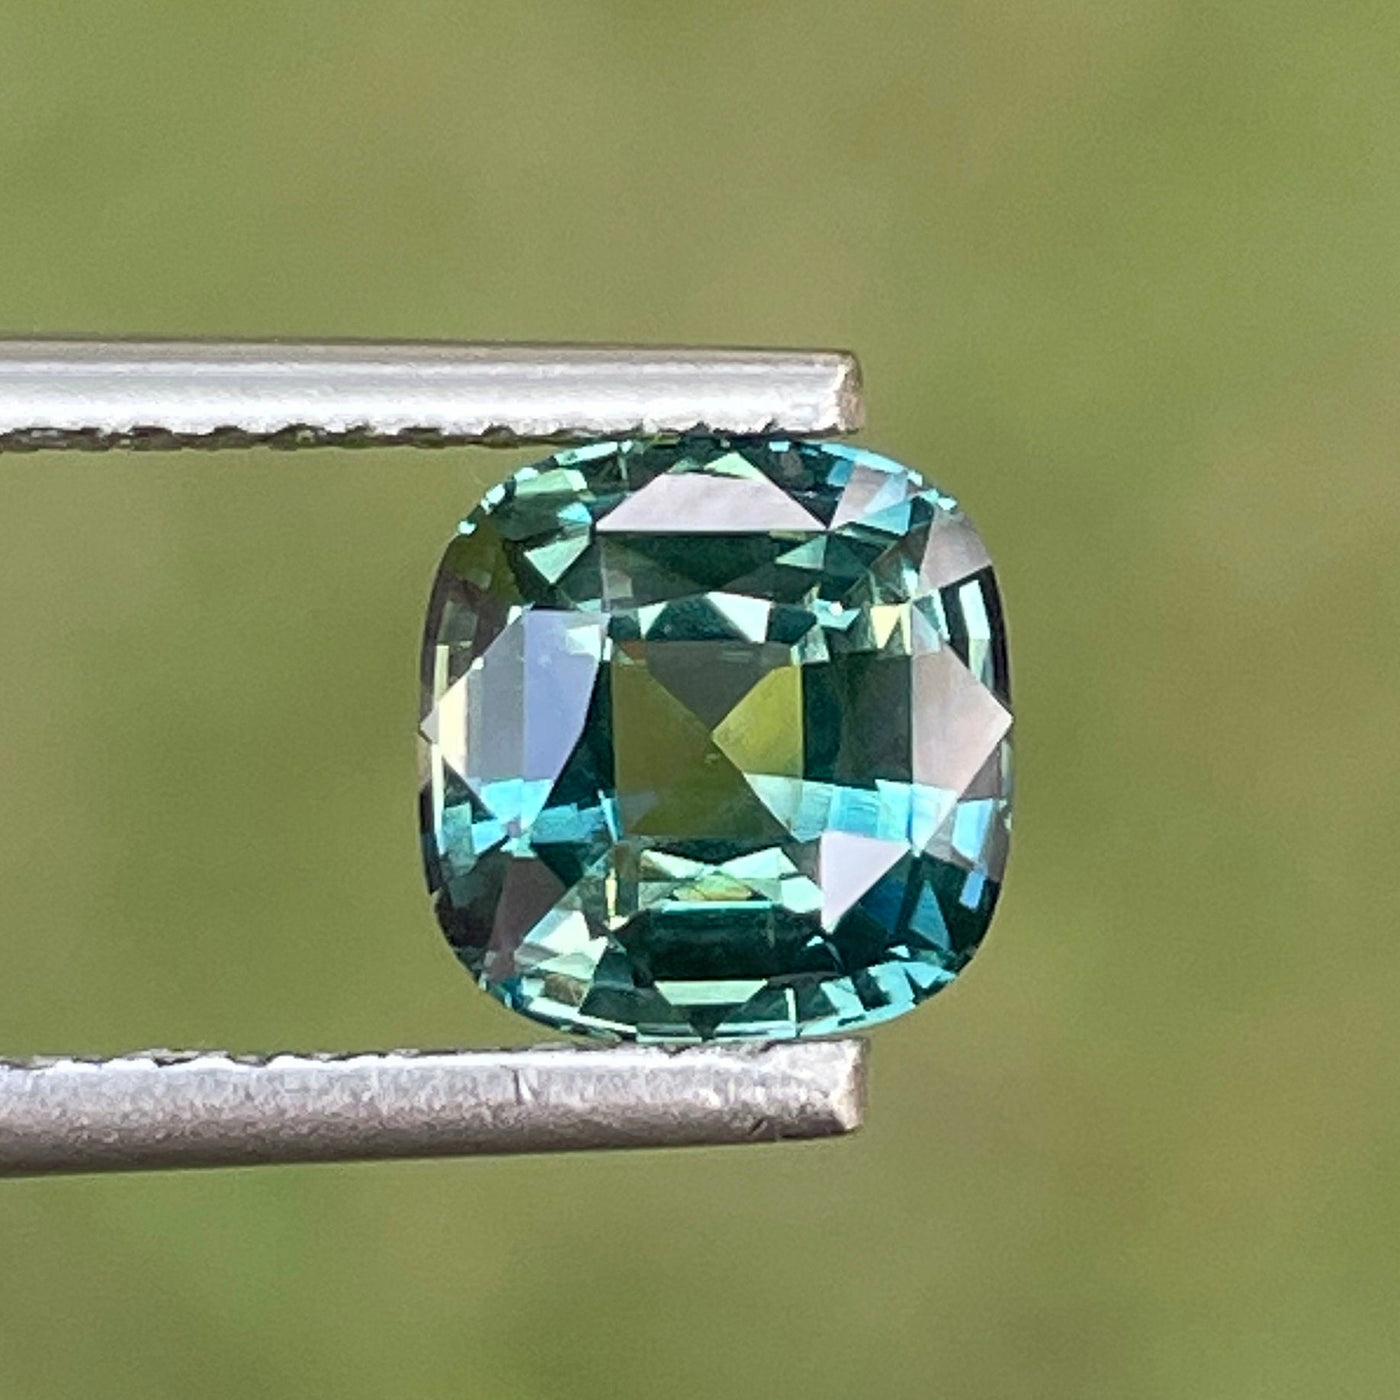 Teal Sapphire l 1.76 Ct l 6.5 x 6.3 x 4.3mm l Cushion l Madagascar l Bespoke Natural Sapphire For  Engagement Ring